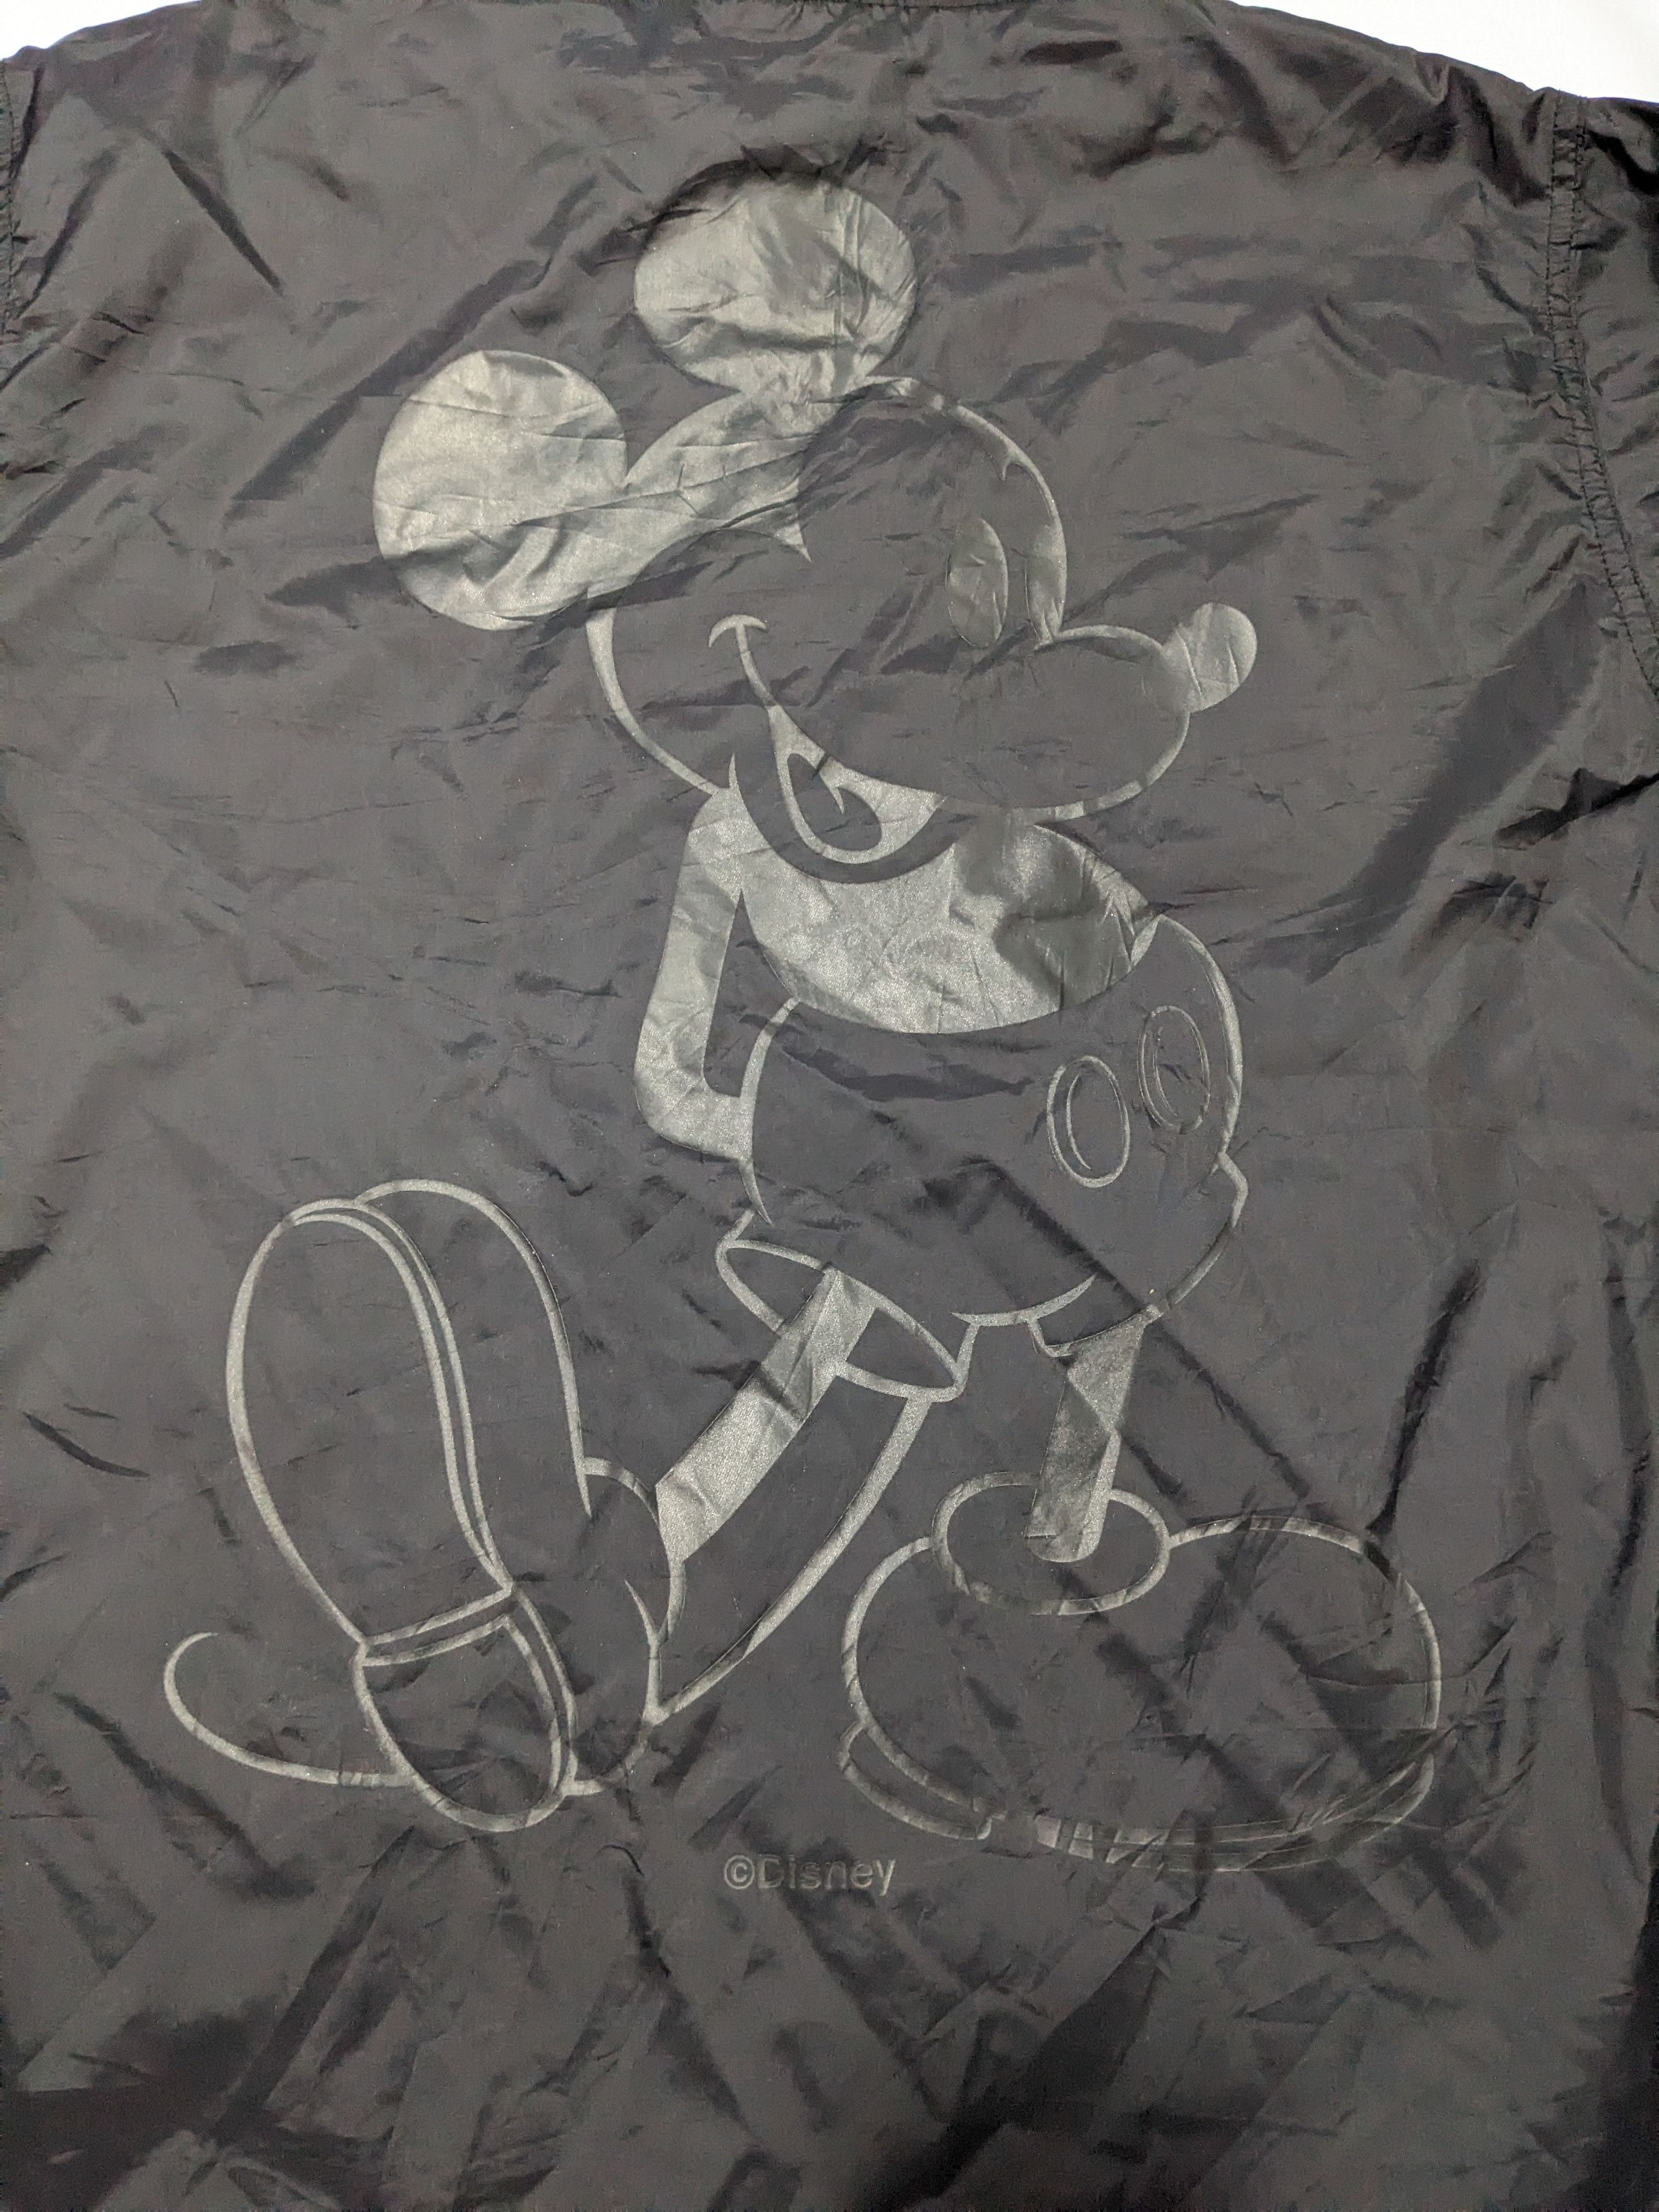 Bounty Hunter x Disney Mickey Mouse Black Coach Jacket - 4